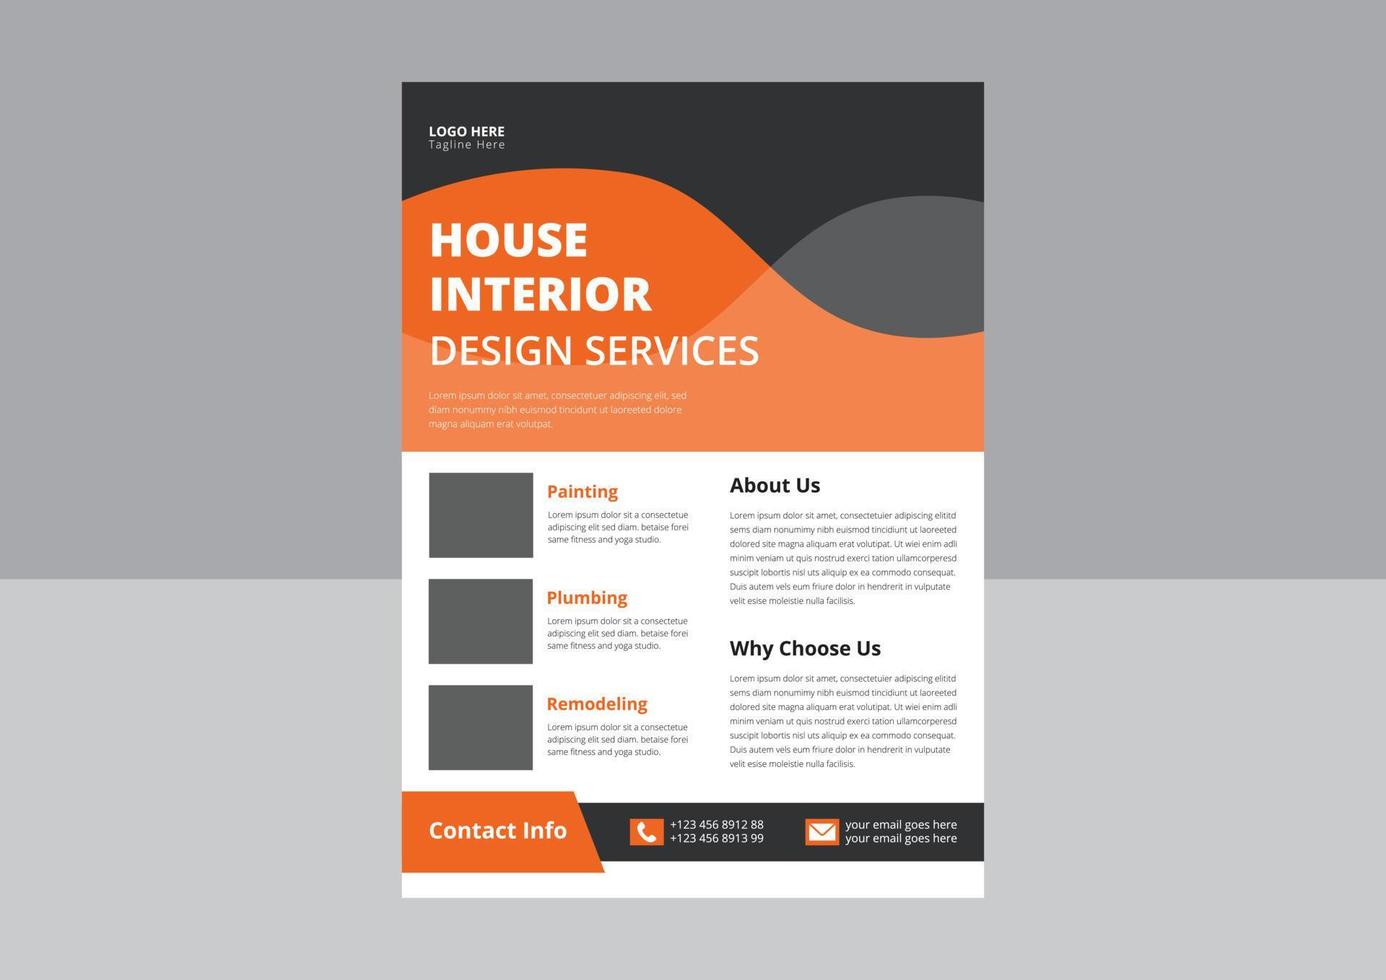 Interior Design Flyer. Real Estate Flyer Design, Home Interior Design Template. Cover, Poster, a4 size, flyer design. vector